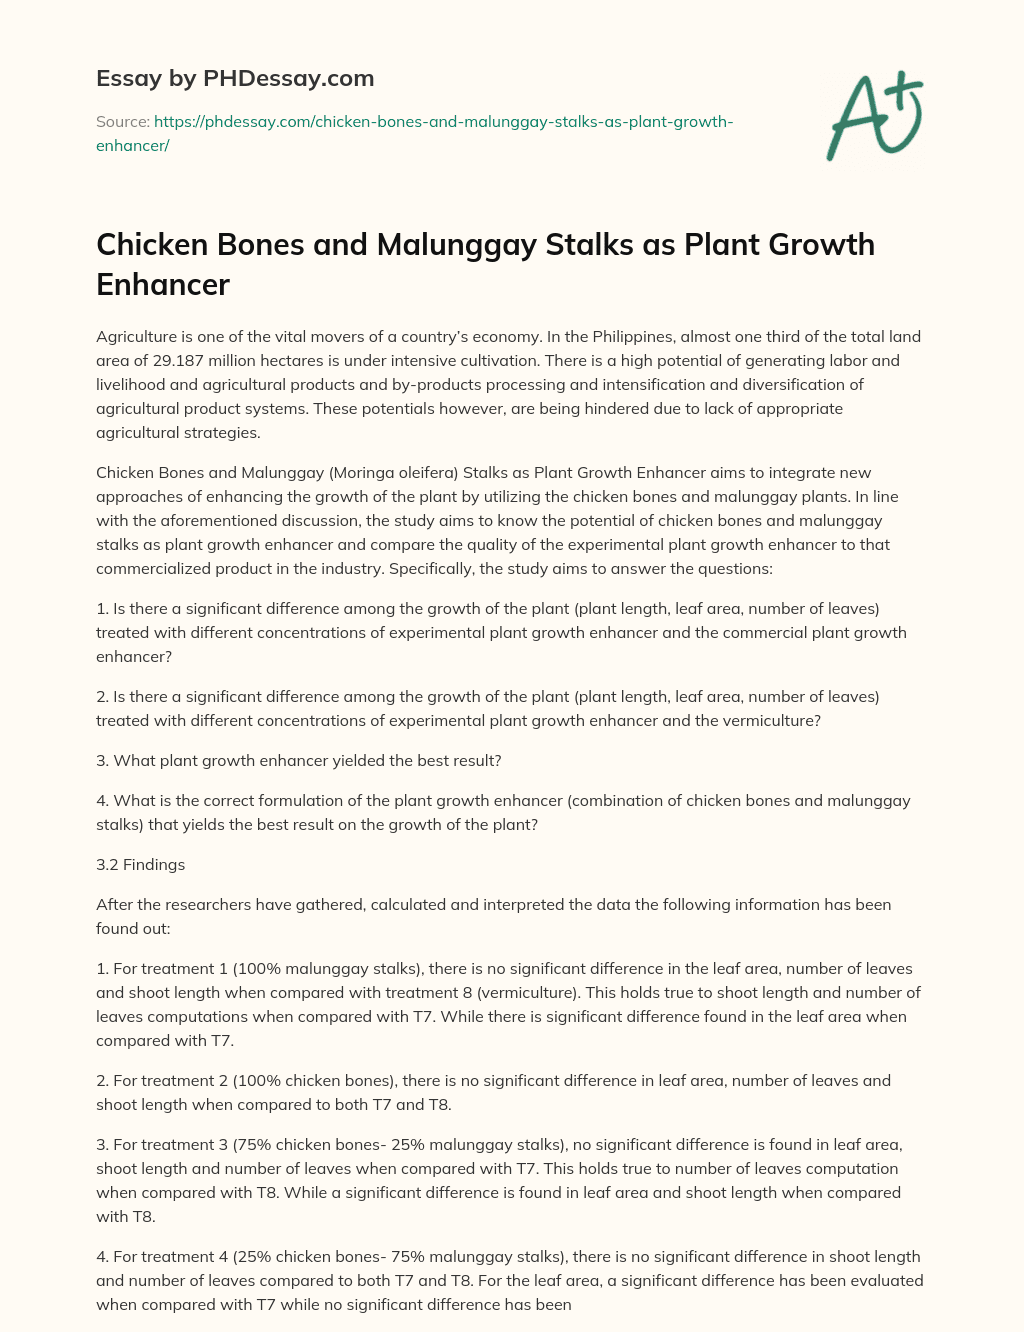 Chicken Bones and Malunggay Stalks as Plant Growth Enhancer essay